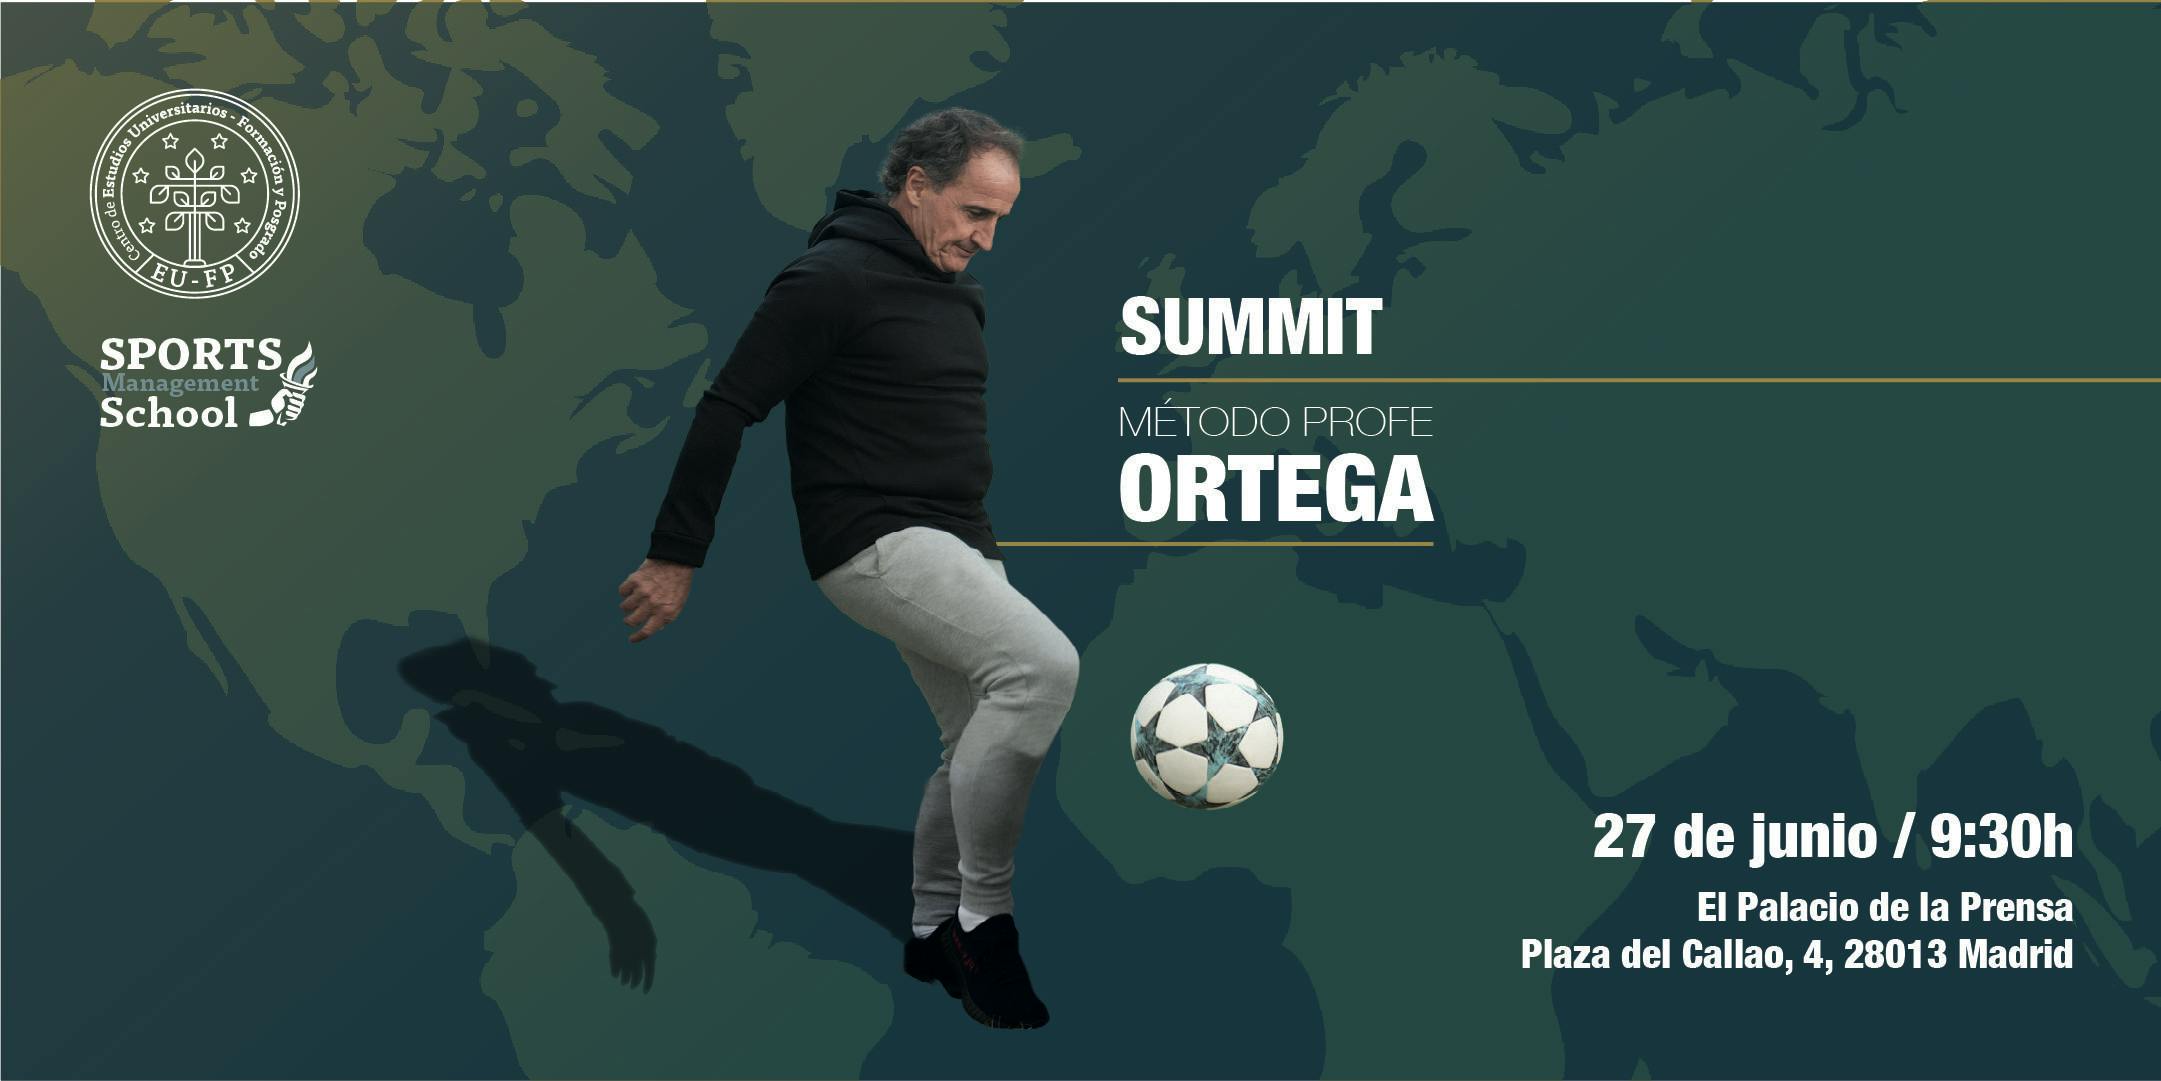 Summit Método Profe Ortega